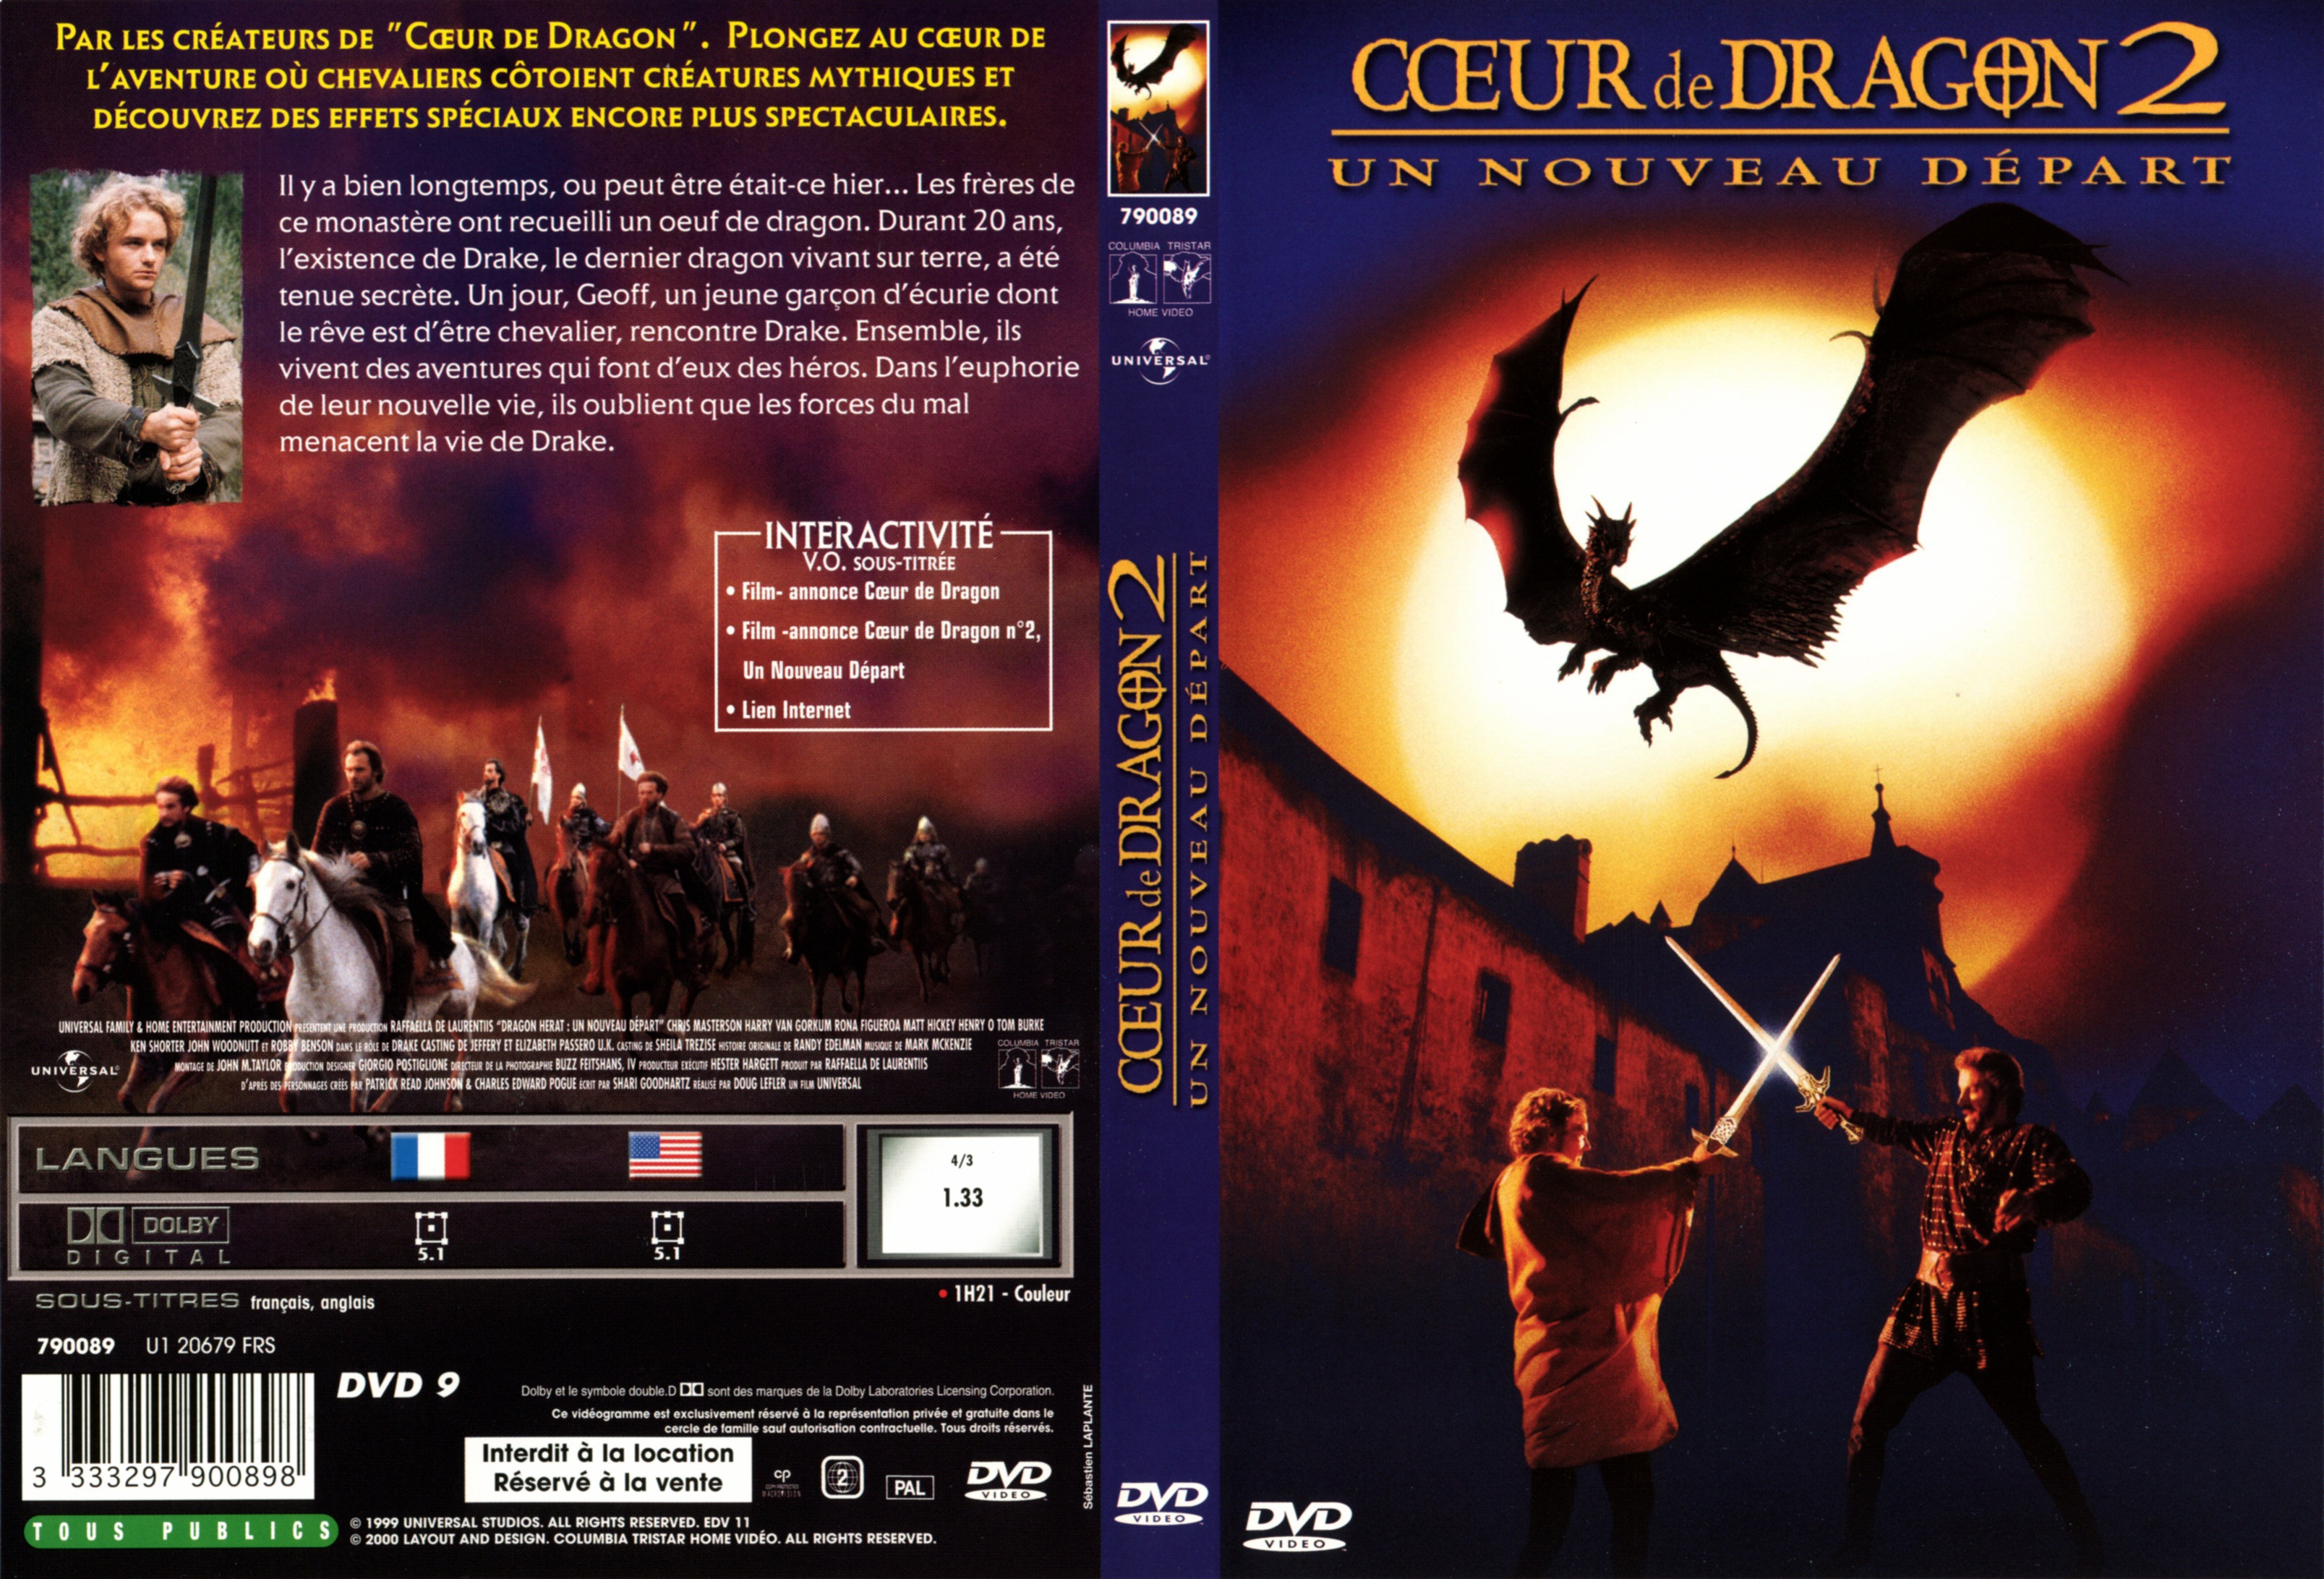 Jaquette DVD Coeur de dragon 2 v2